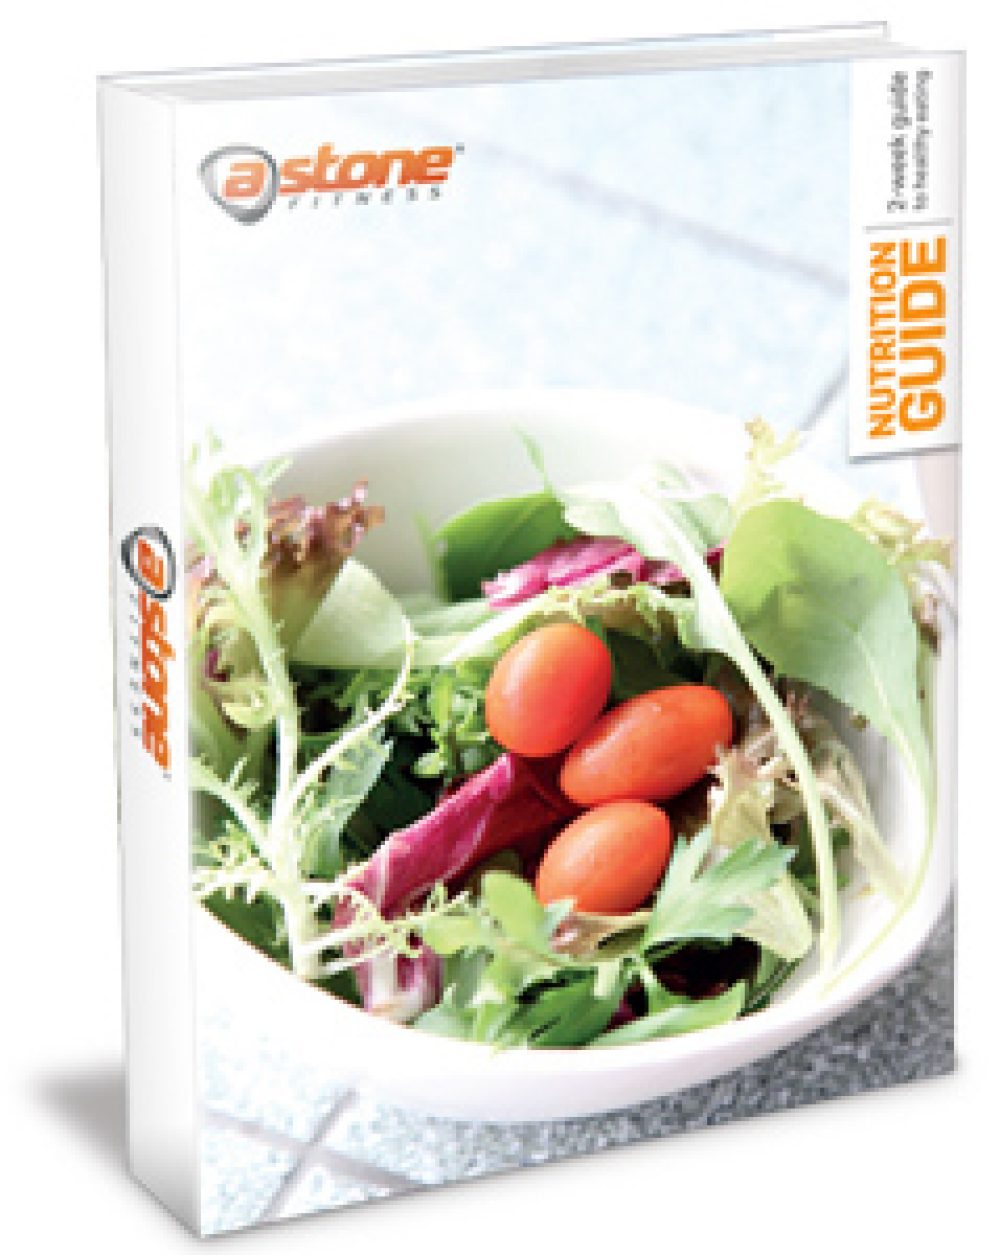 ebook-nutrition-guide-web-image-thumb